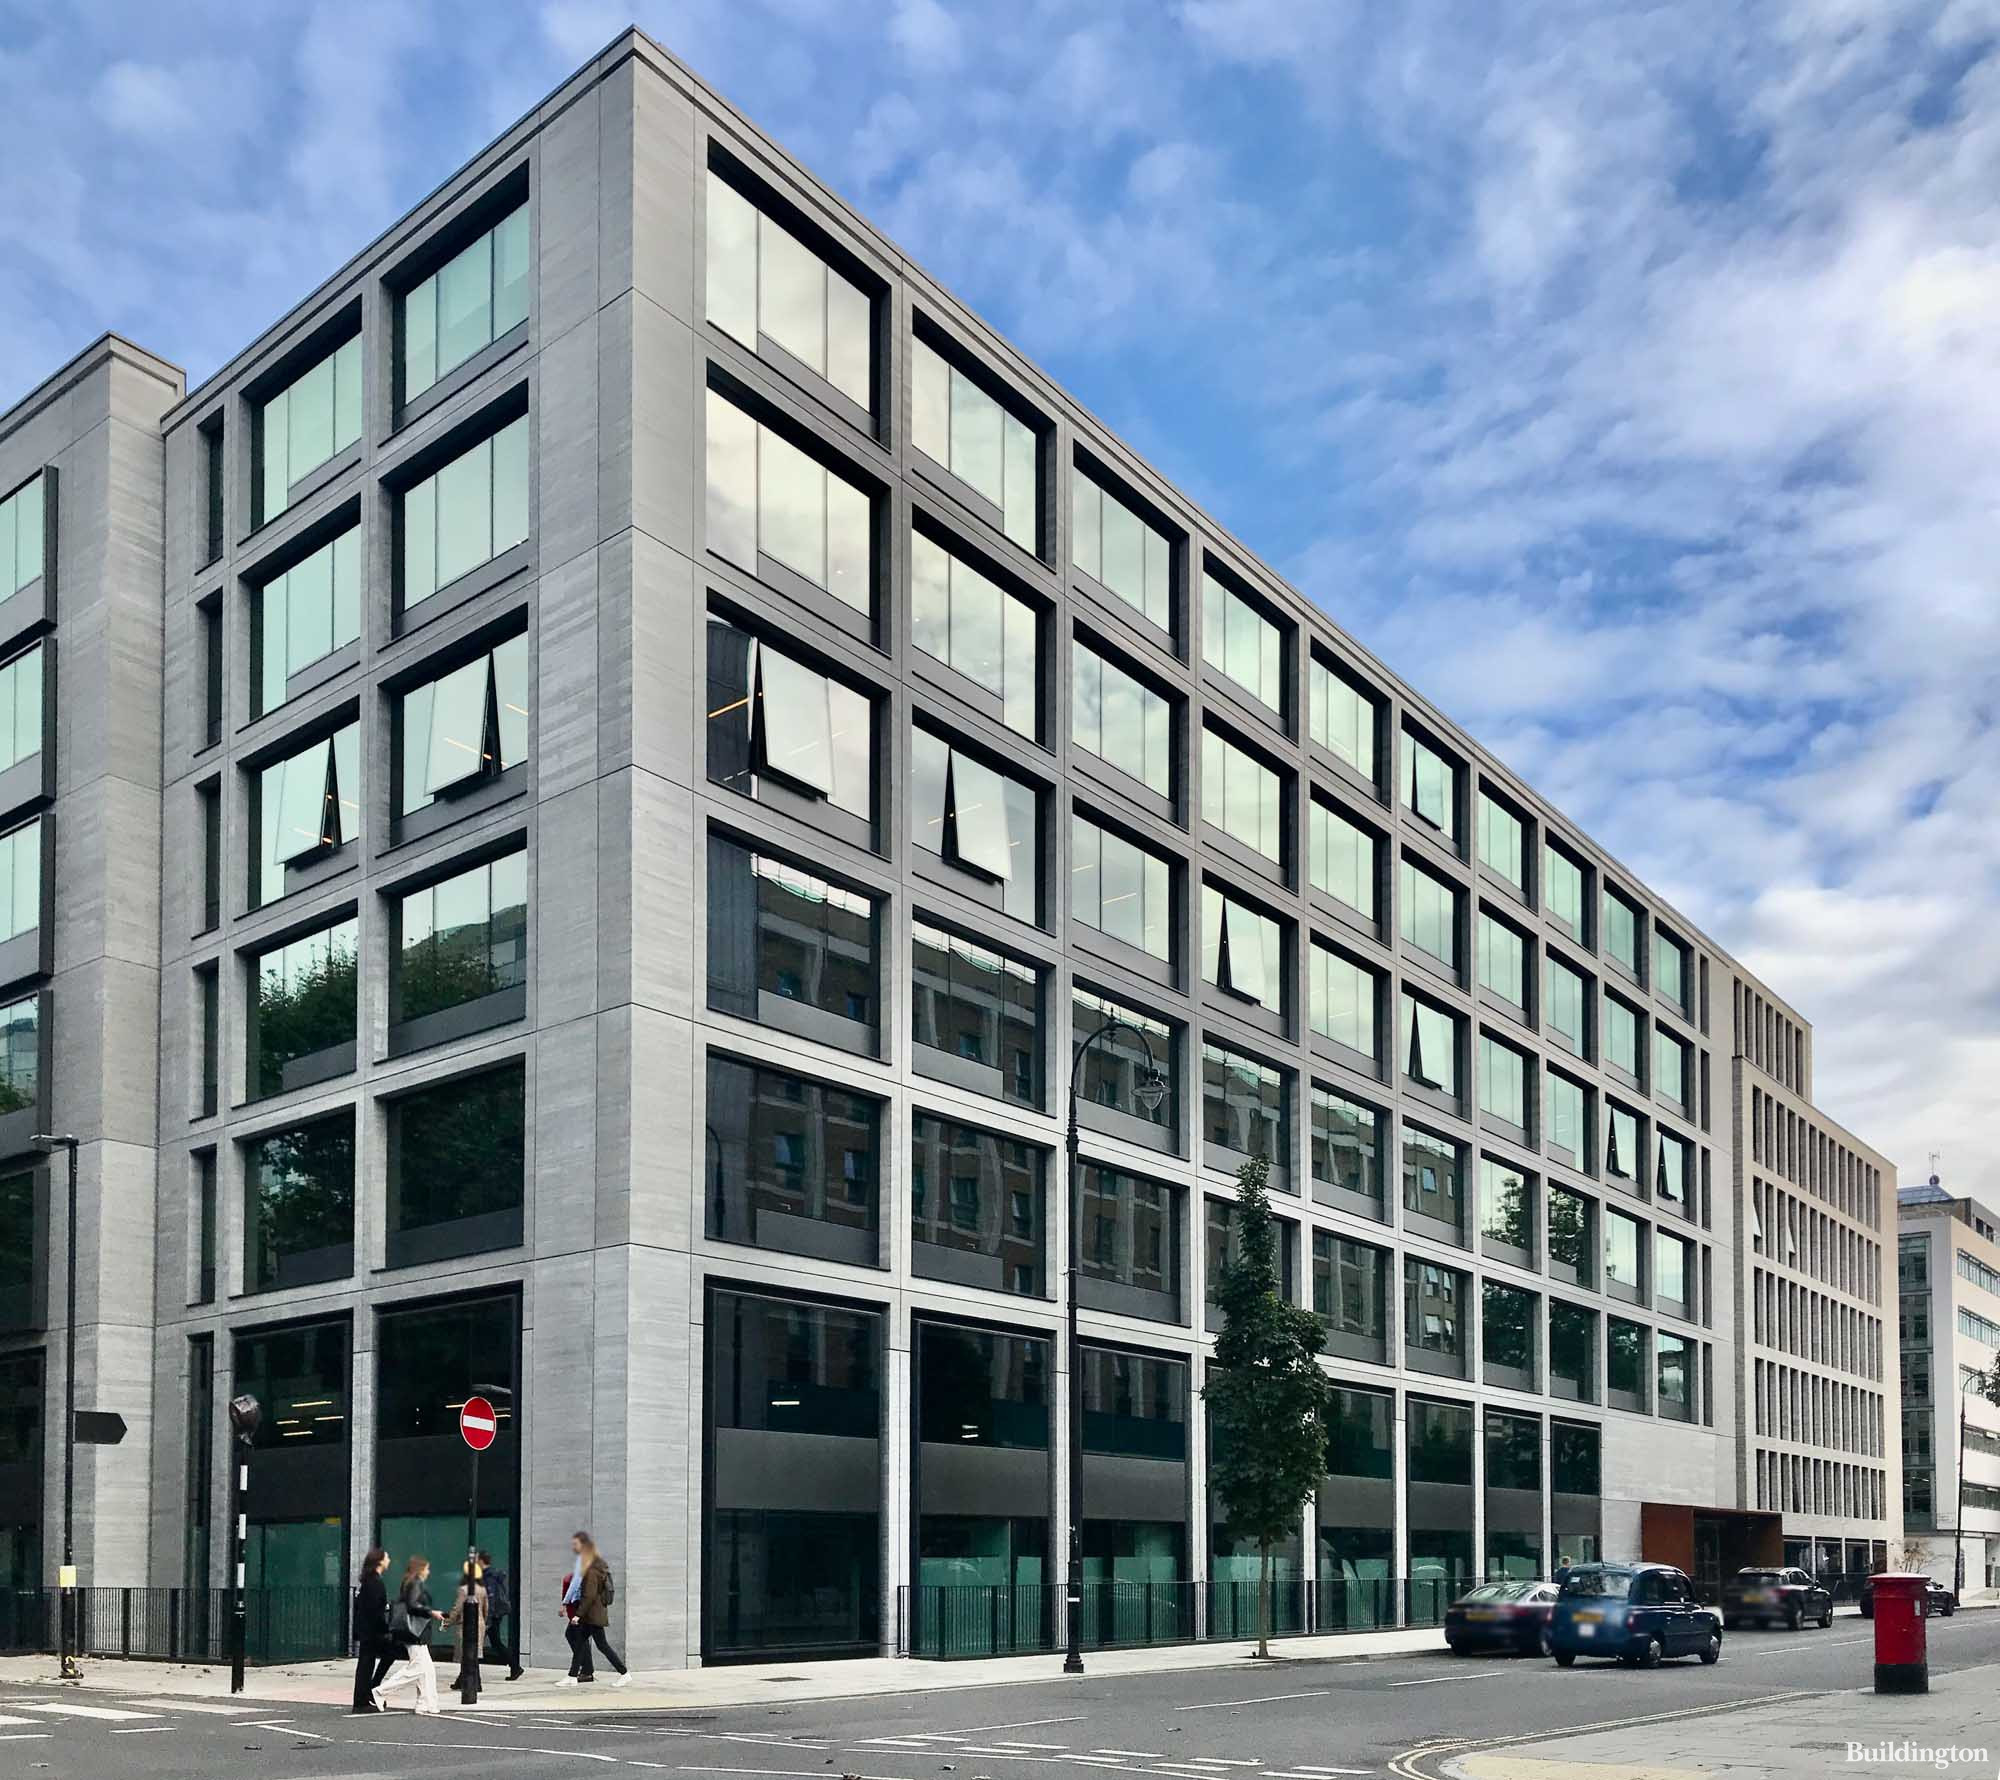 Derwent London's first net-zero carbon building at 80 Charlotte Street designed by Make in autumn 2021.